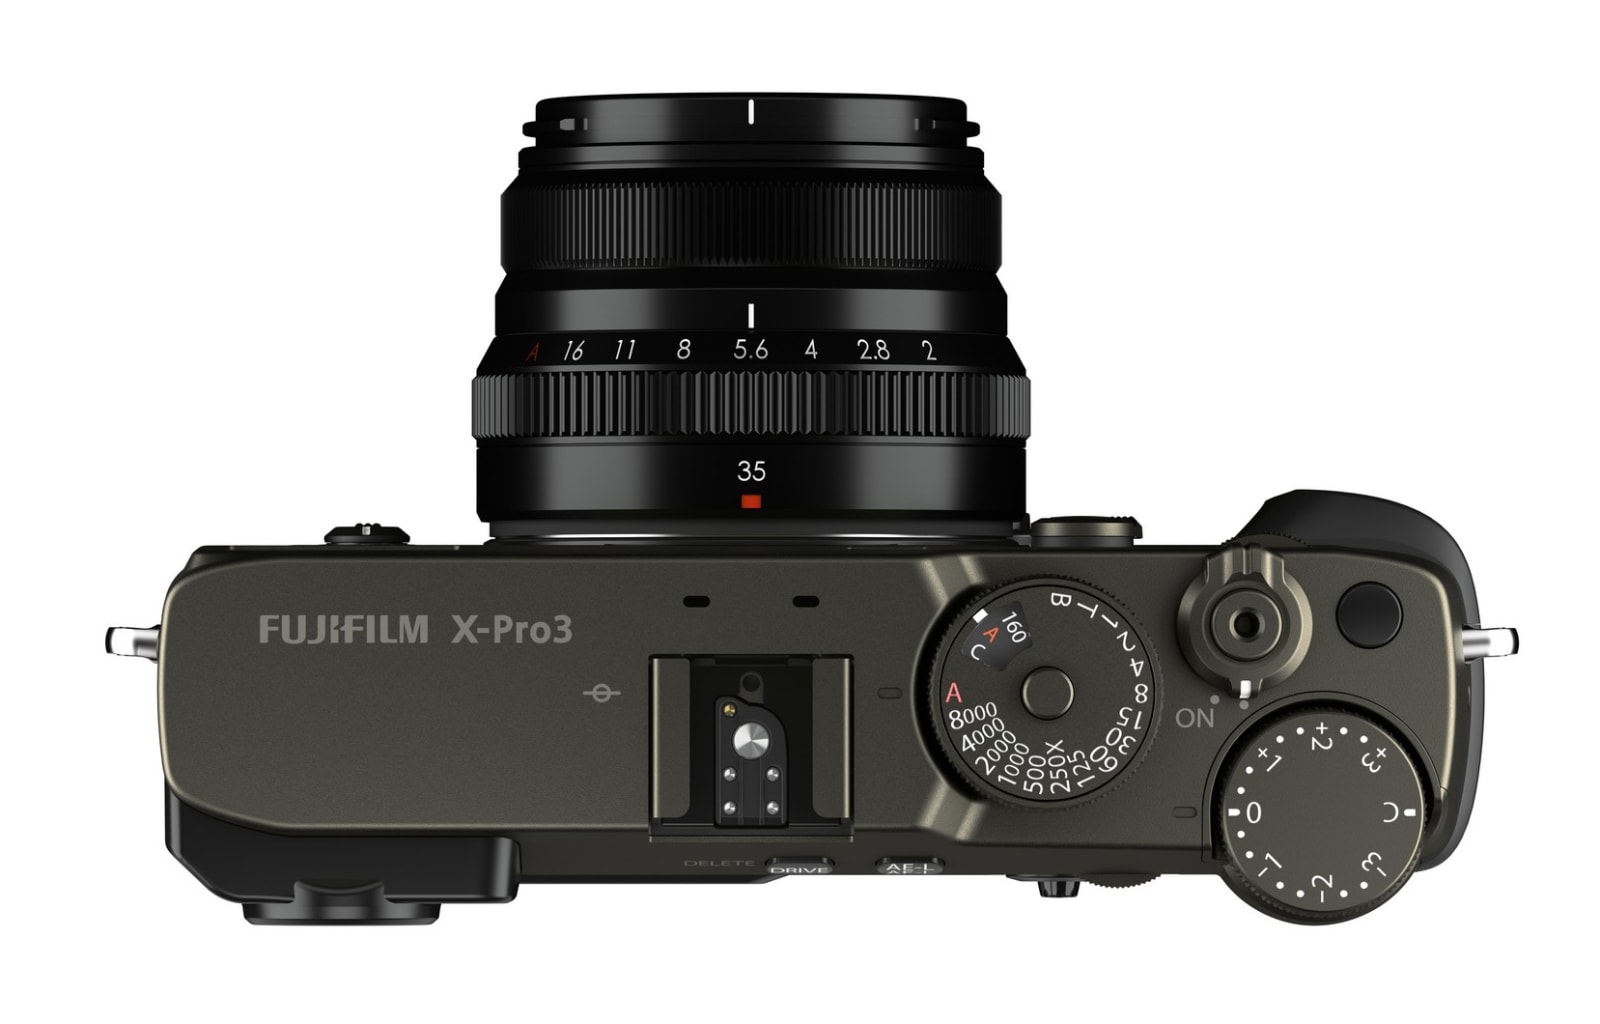 Fujifilm X-Pro3 APS-C mirrorless camera